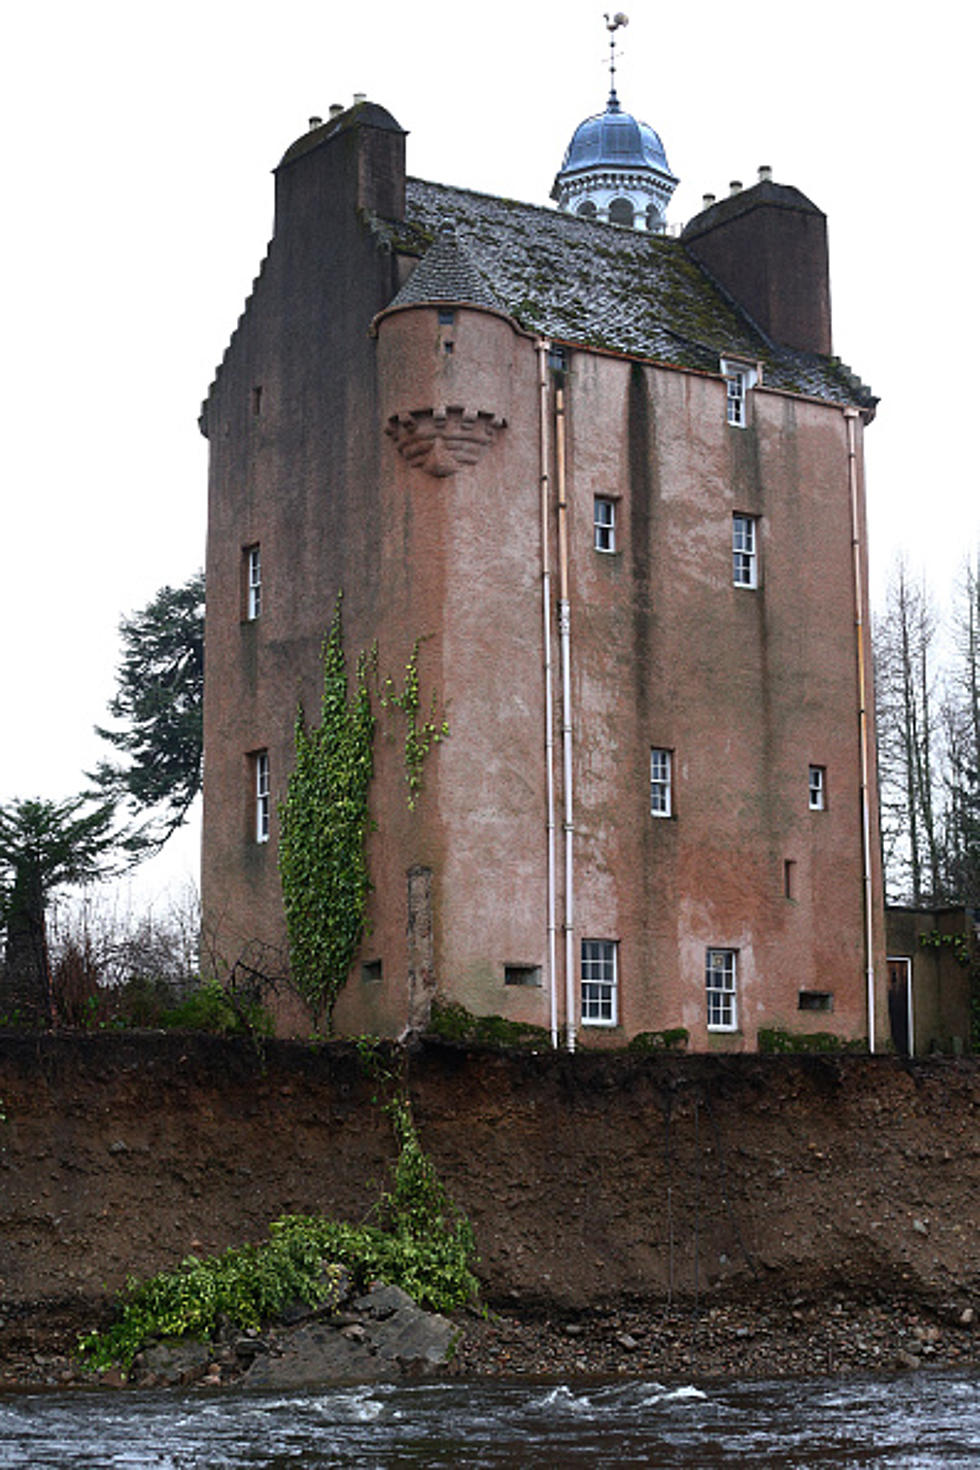 Scottish Castle Teetering on the Brink